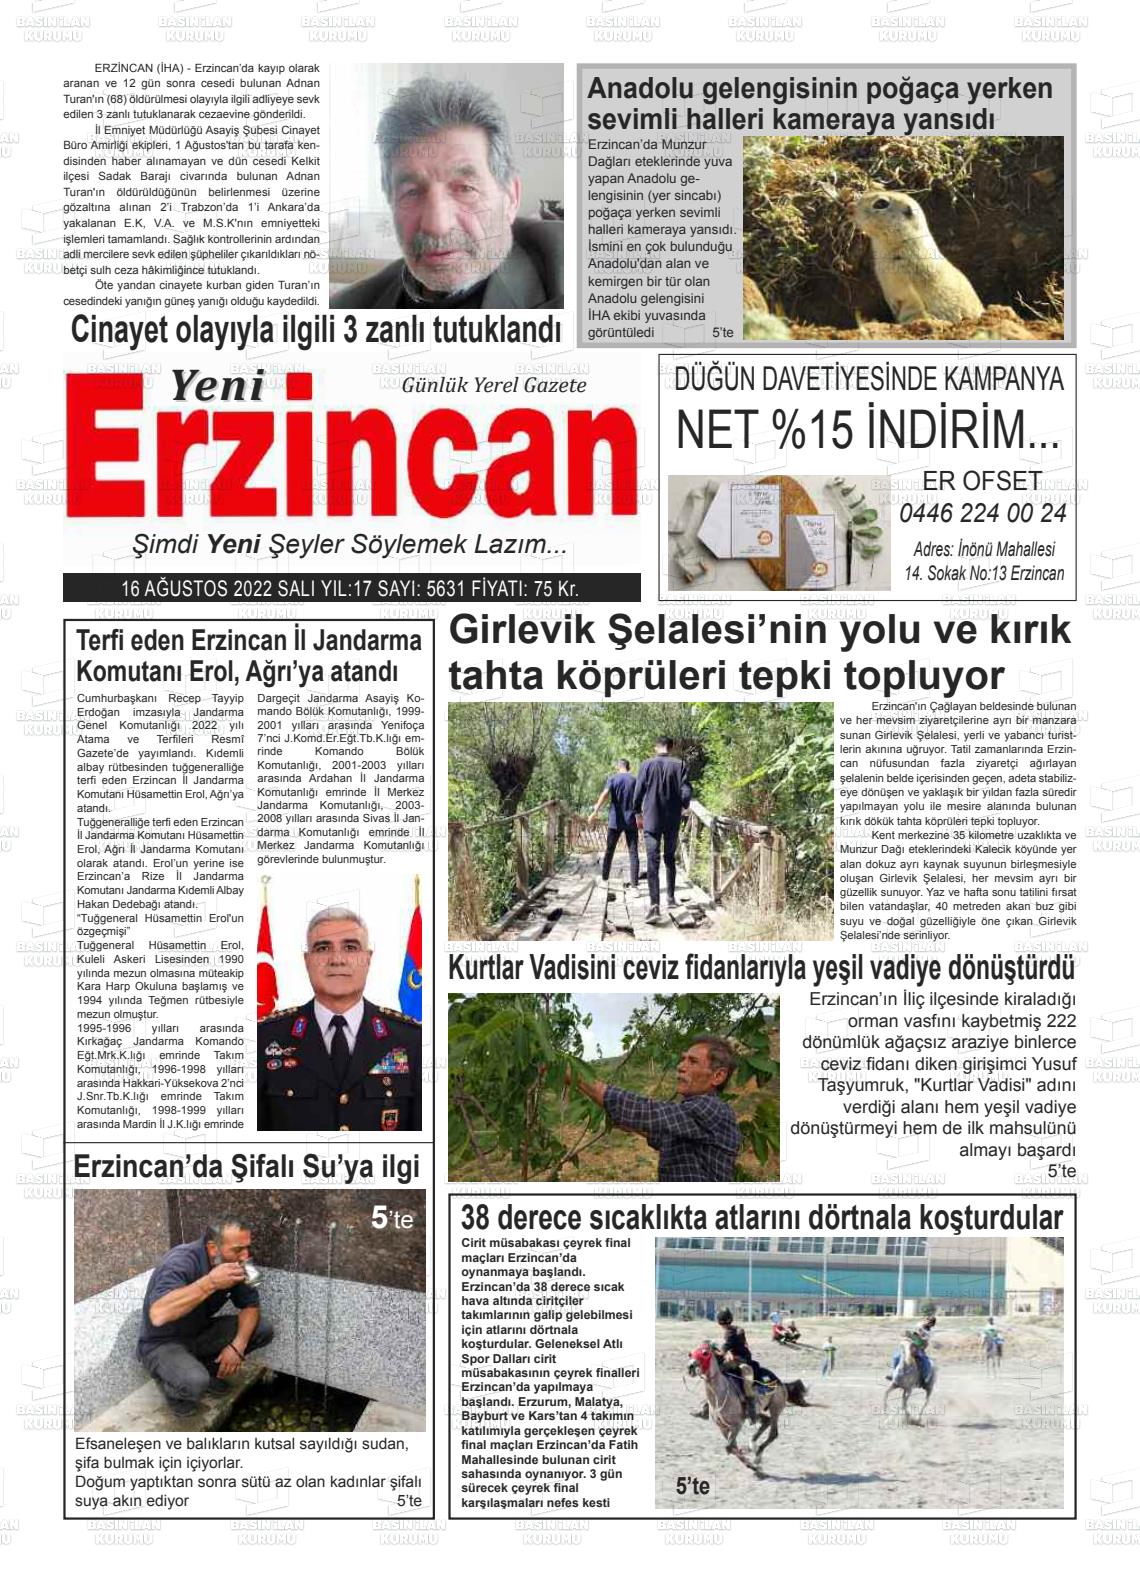 16 Ağustos 2022 Yeni Erzincan Gazete Manşeti